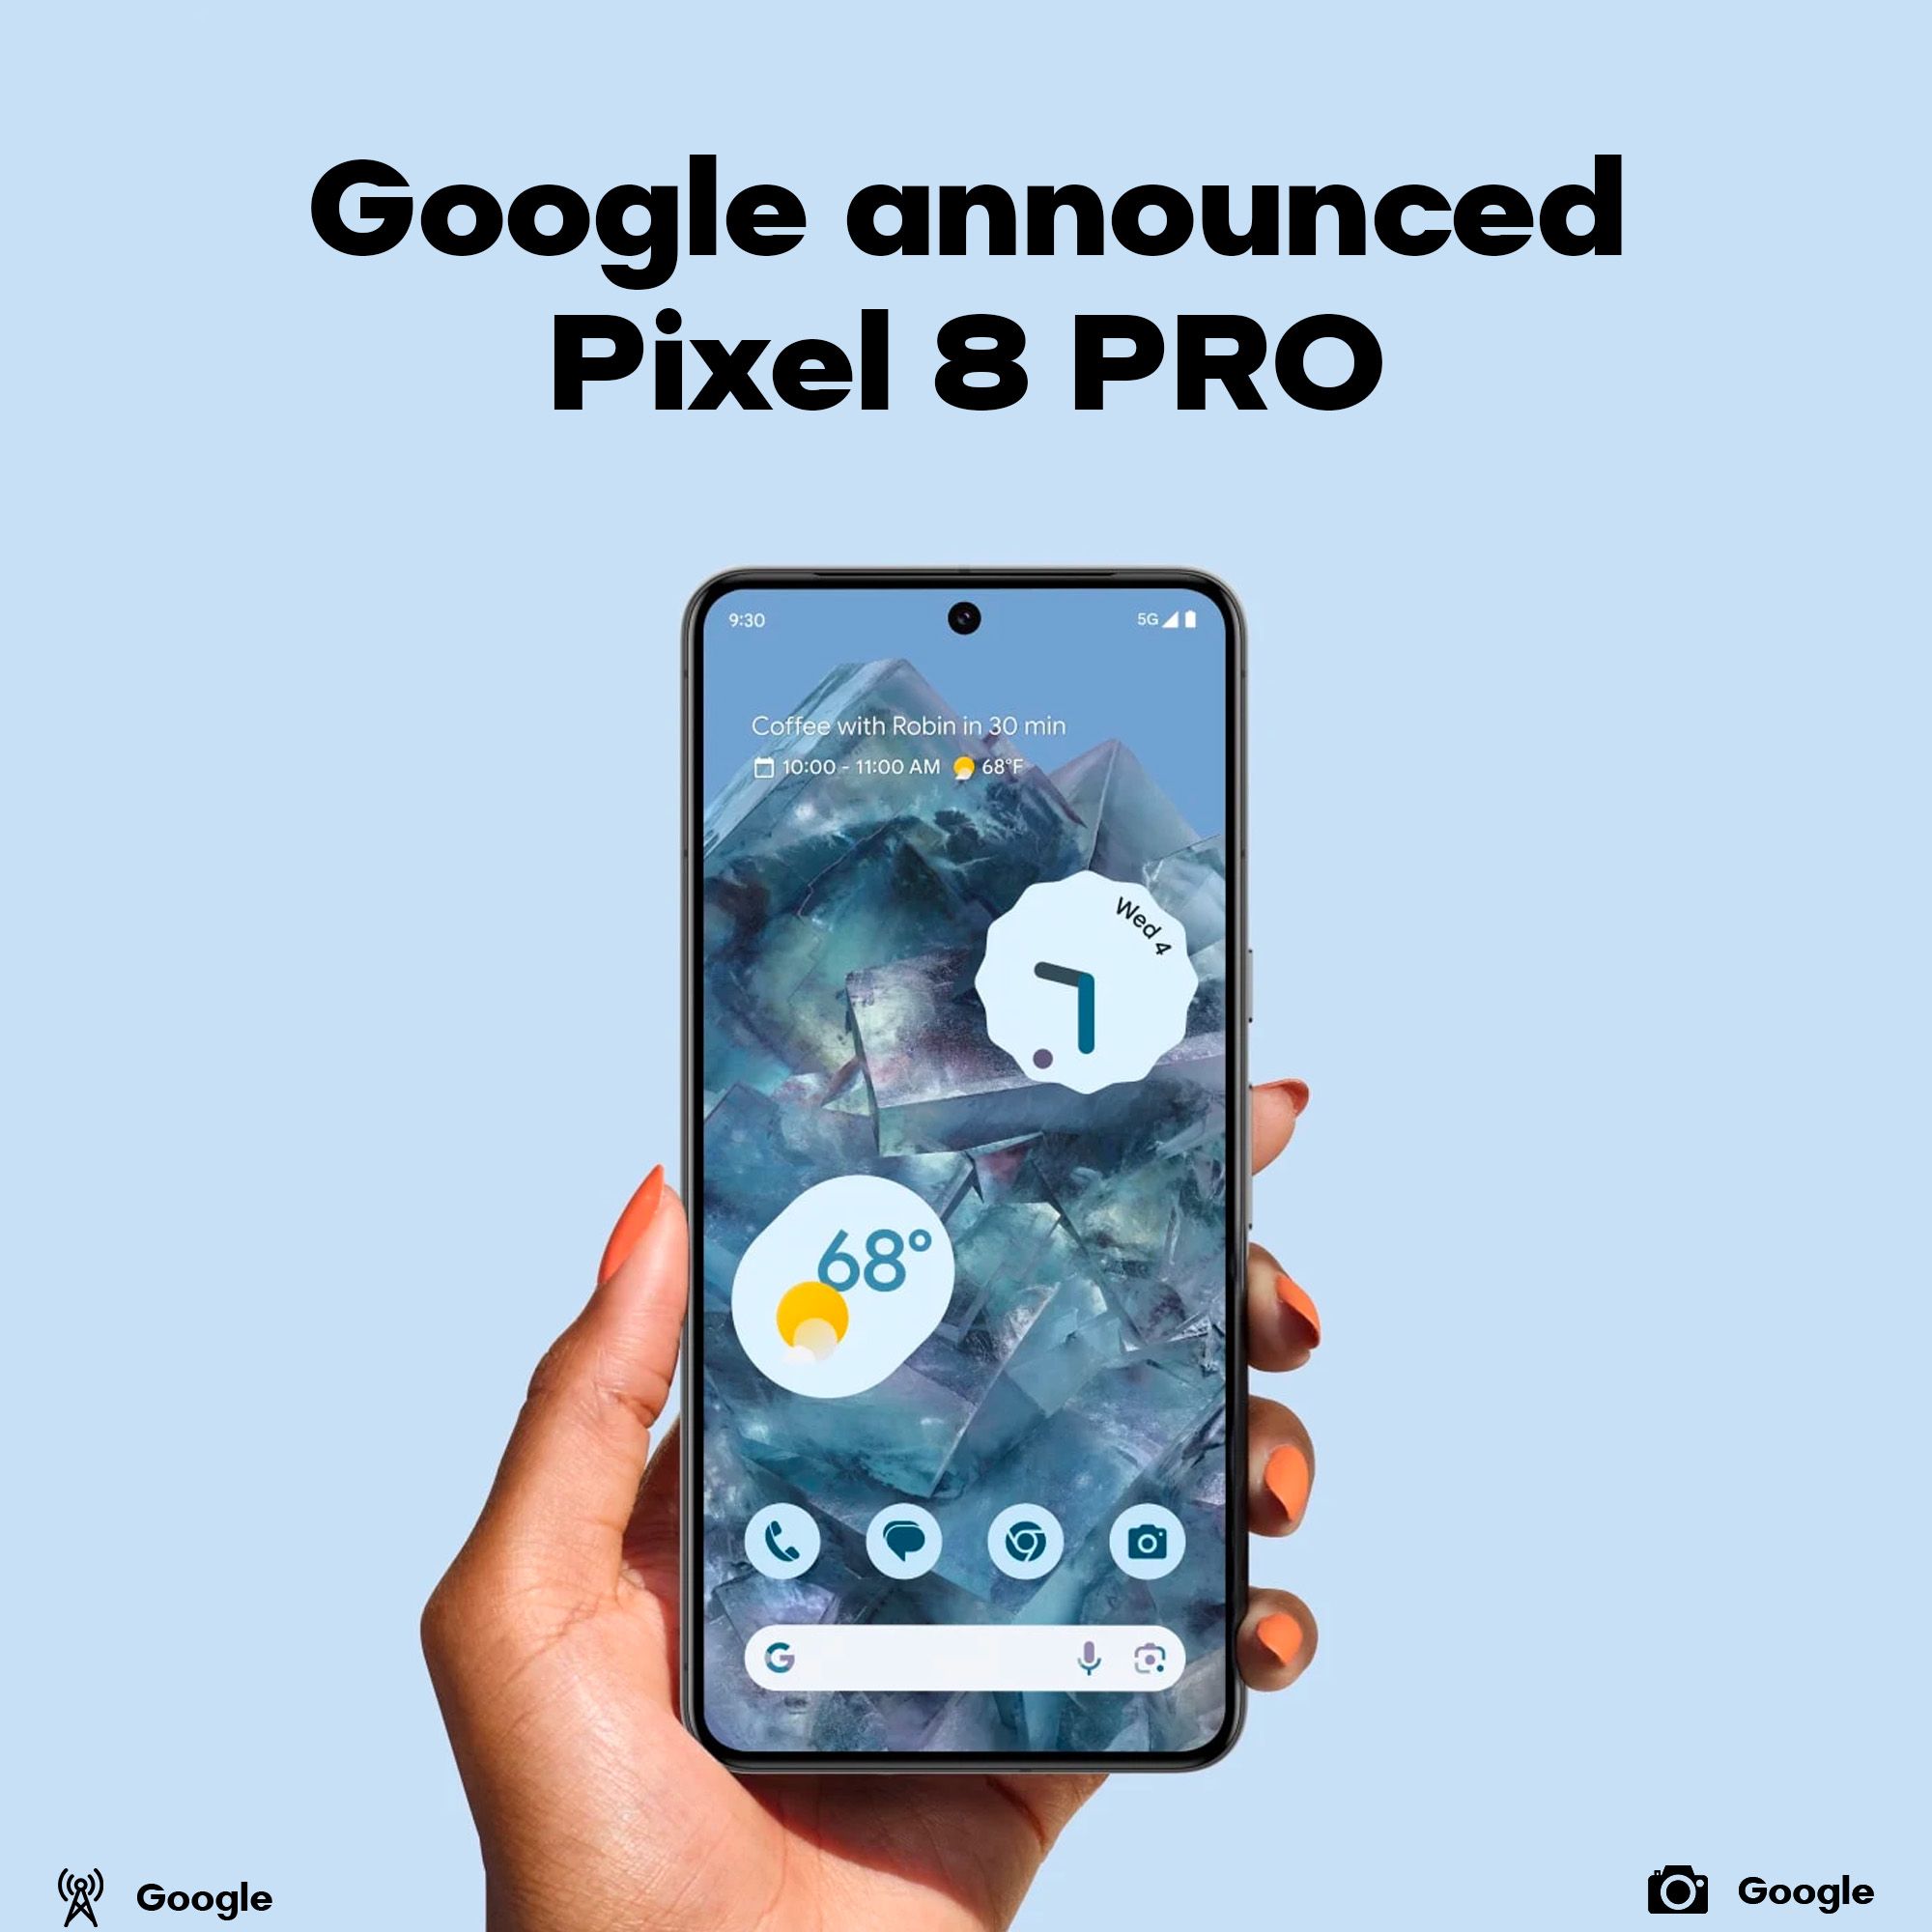 Pixel 8 Pro announced